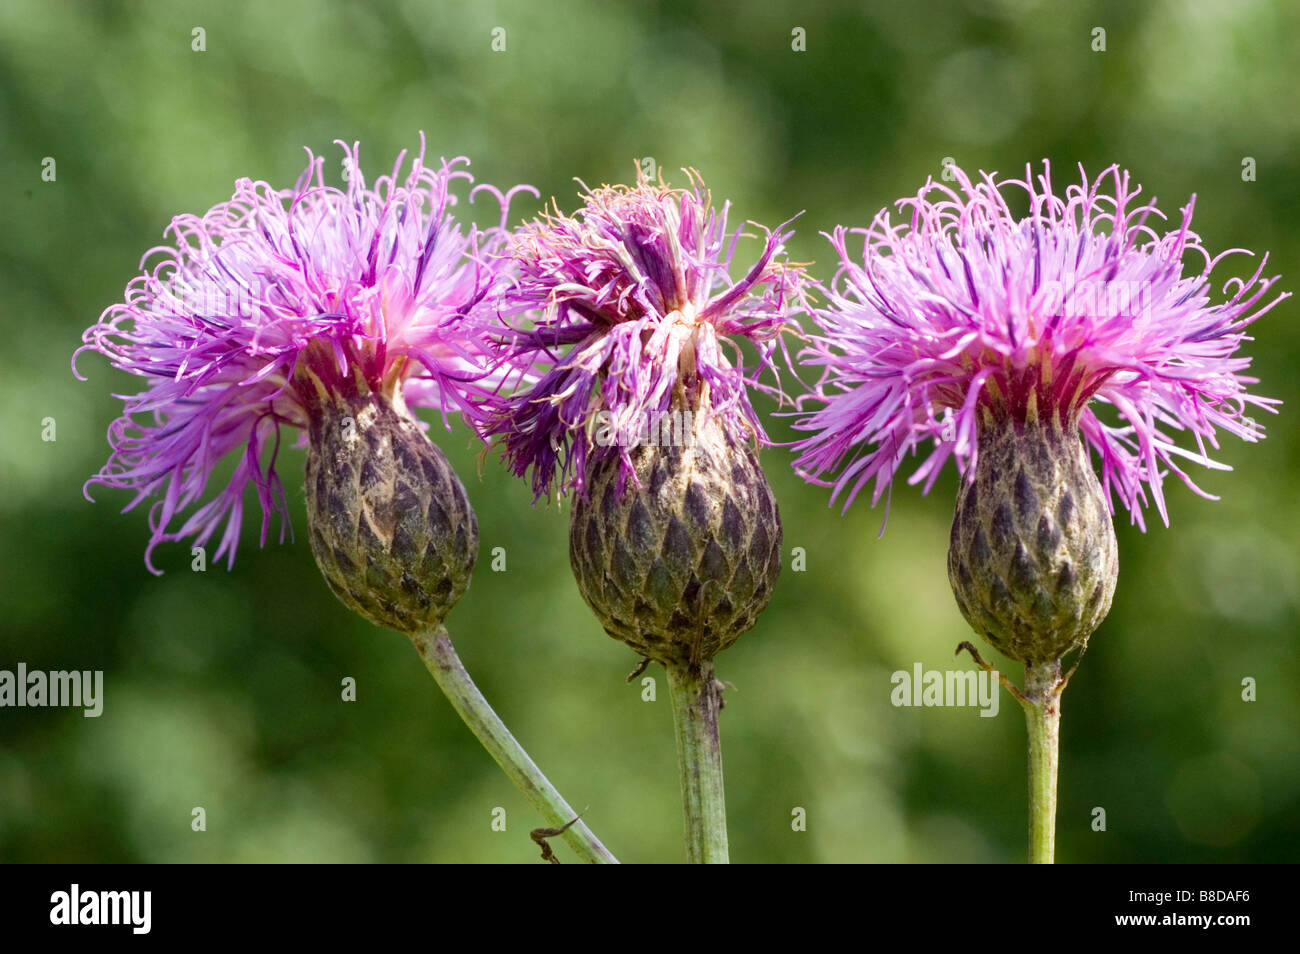 Violet flowers of Saw-wort, Plumeless Saw-wort,  Compositae, Serratula gmelini, Russia Stock Photo